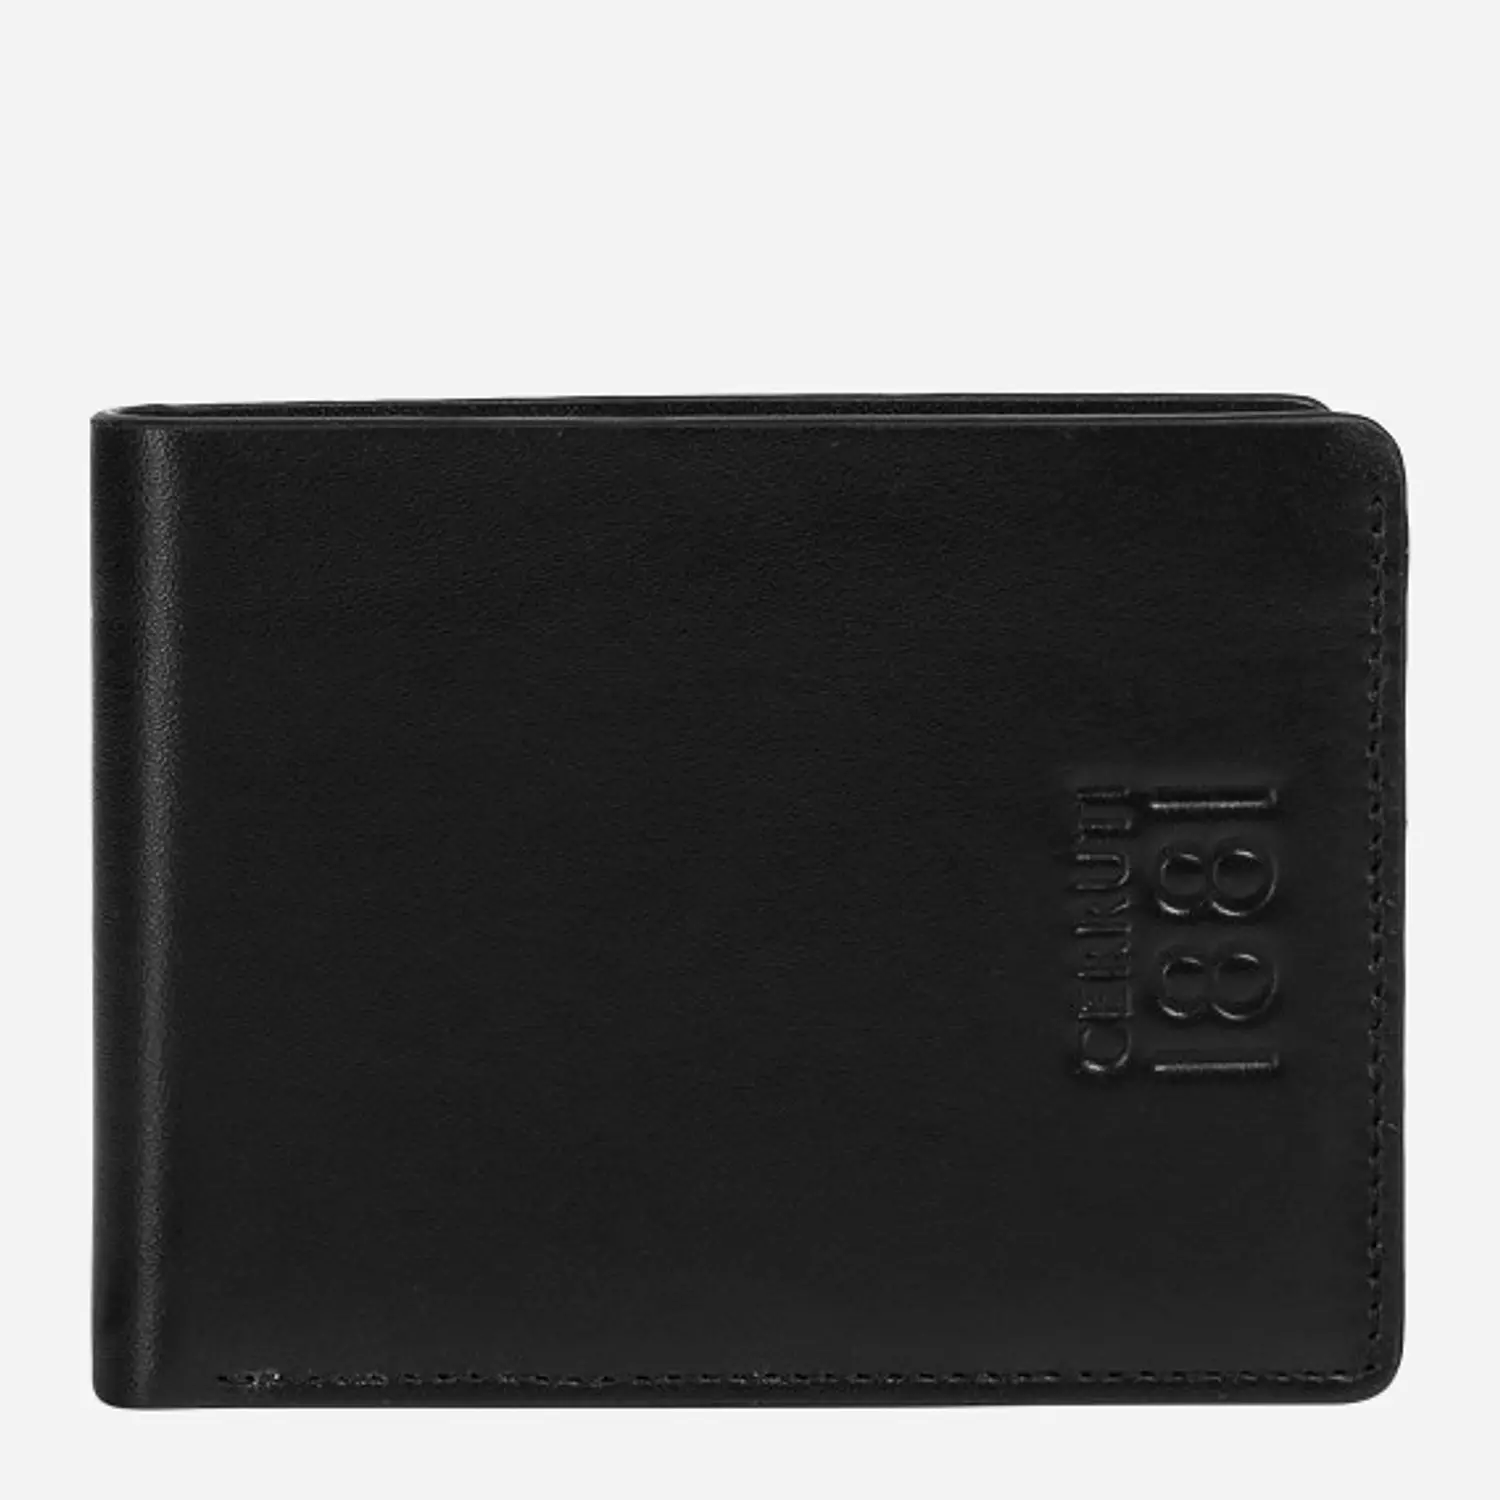 Cerruti1881 - Wallet Calf Leather Black - CEPU05922M hover image